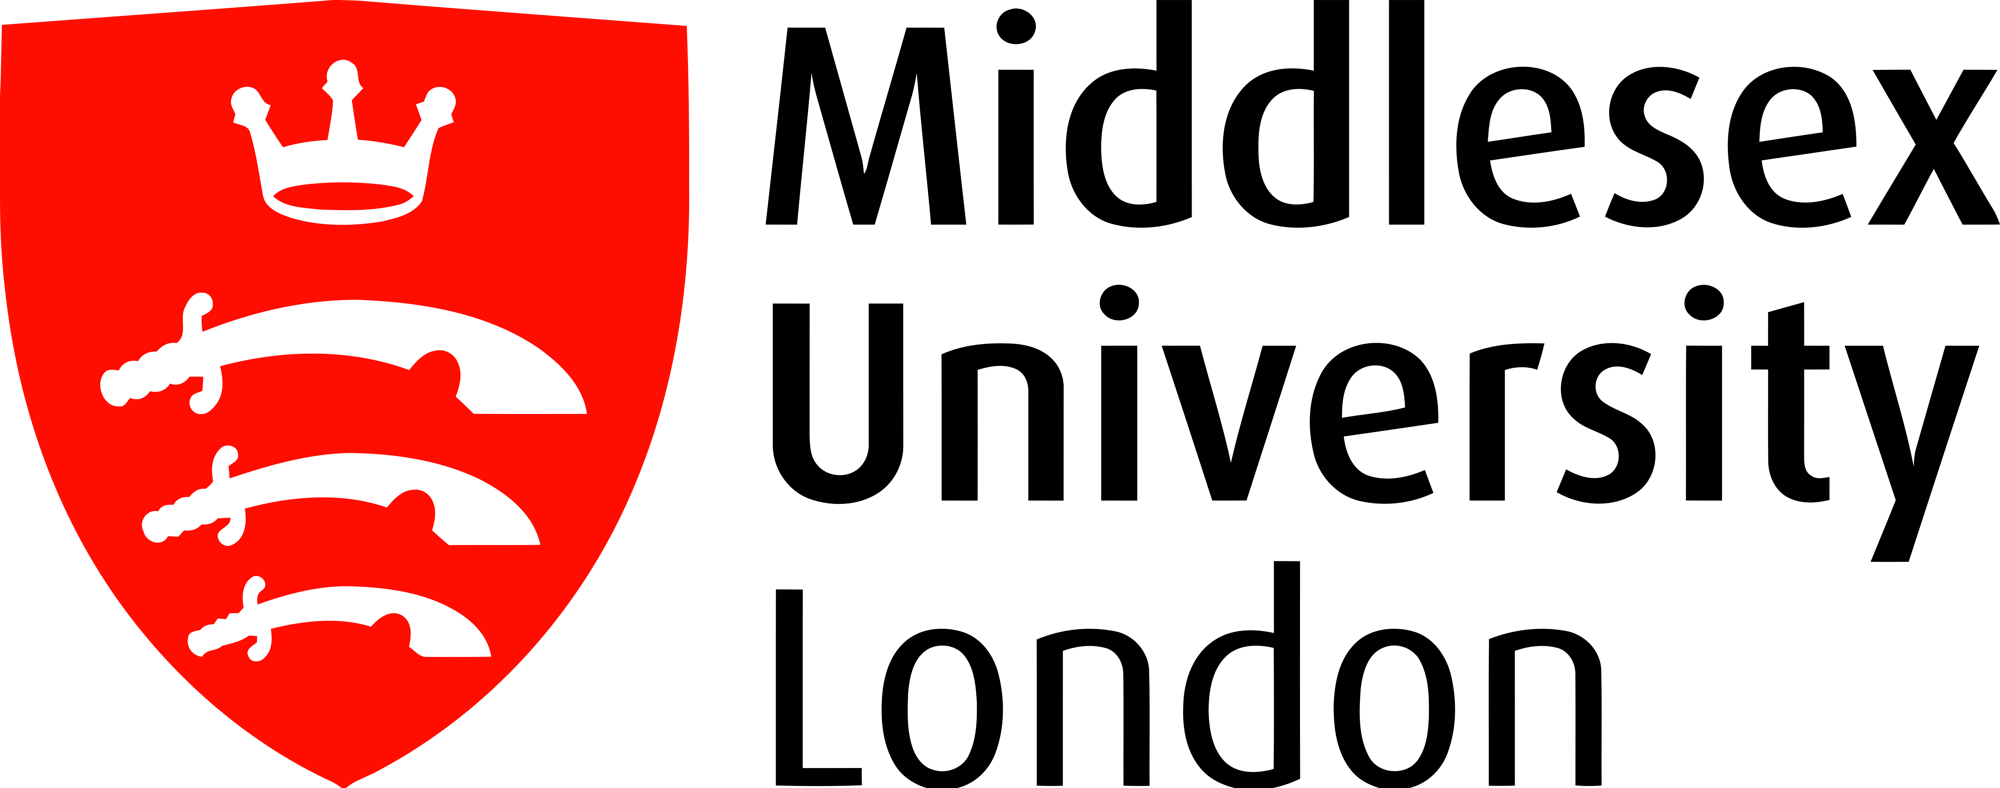 Middlesex_University_Logo_London